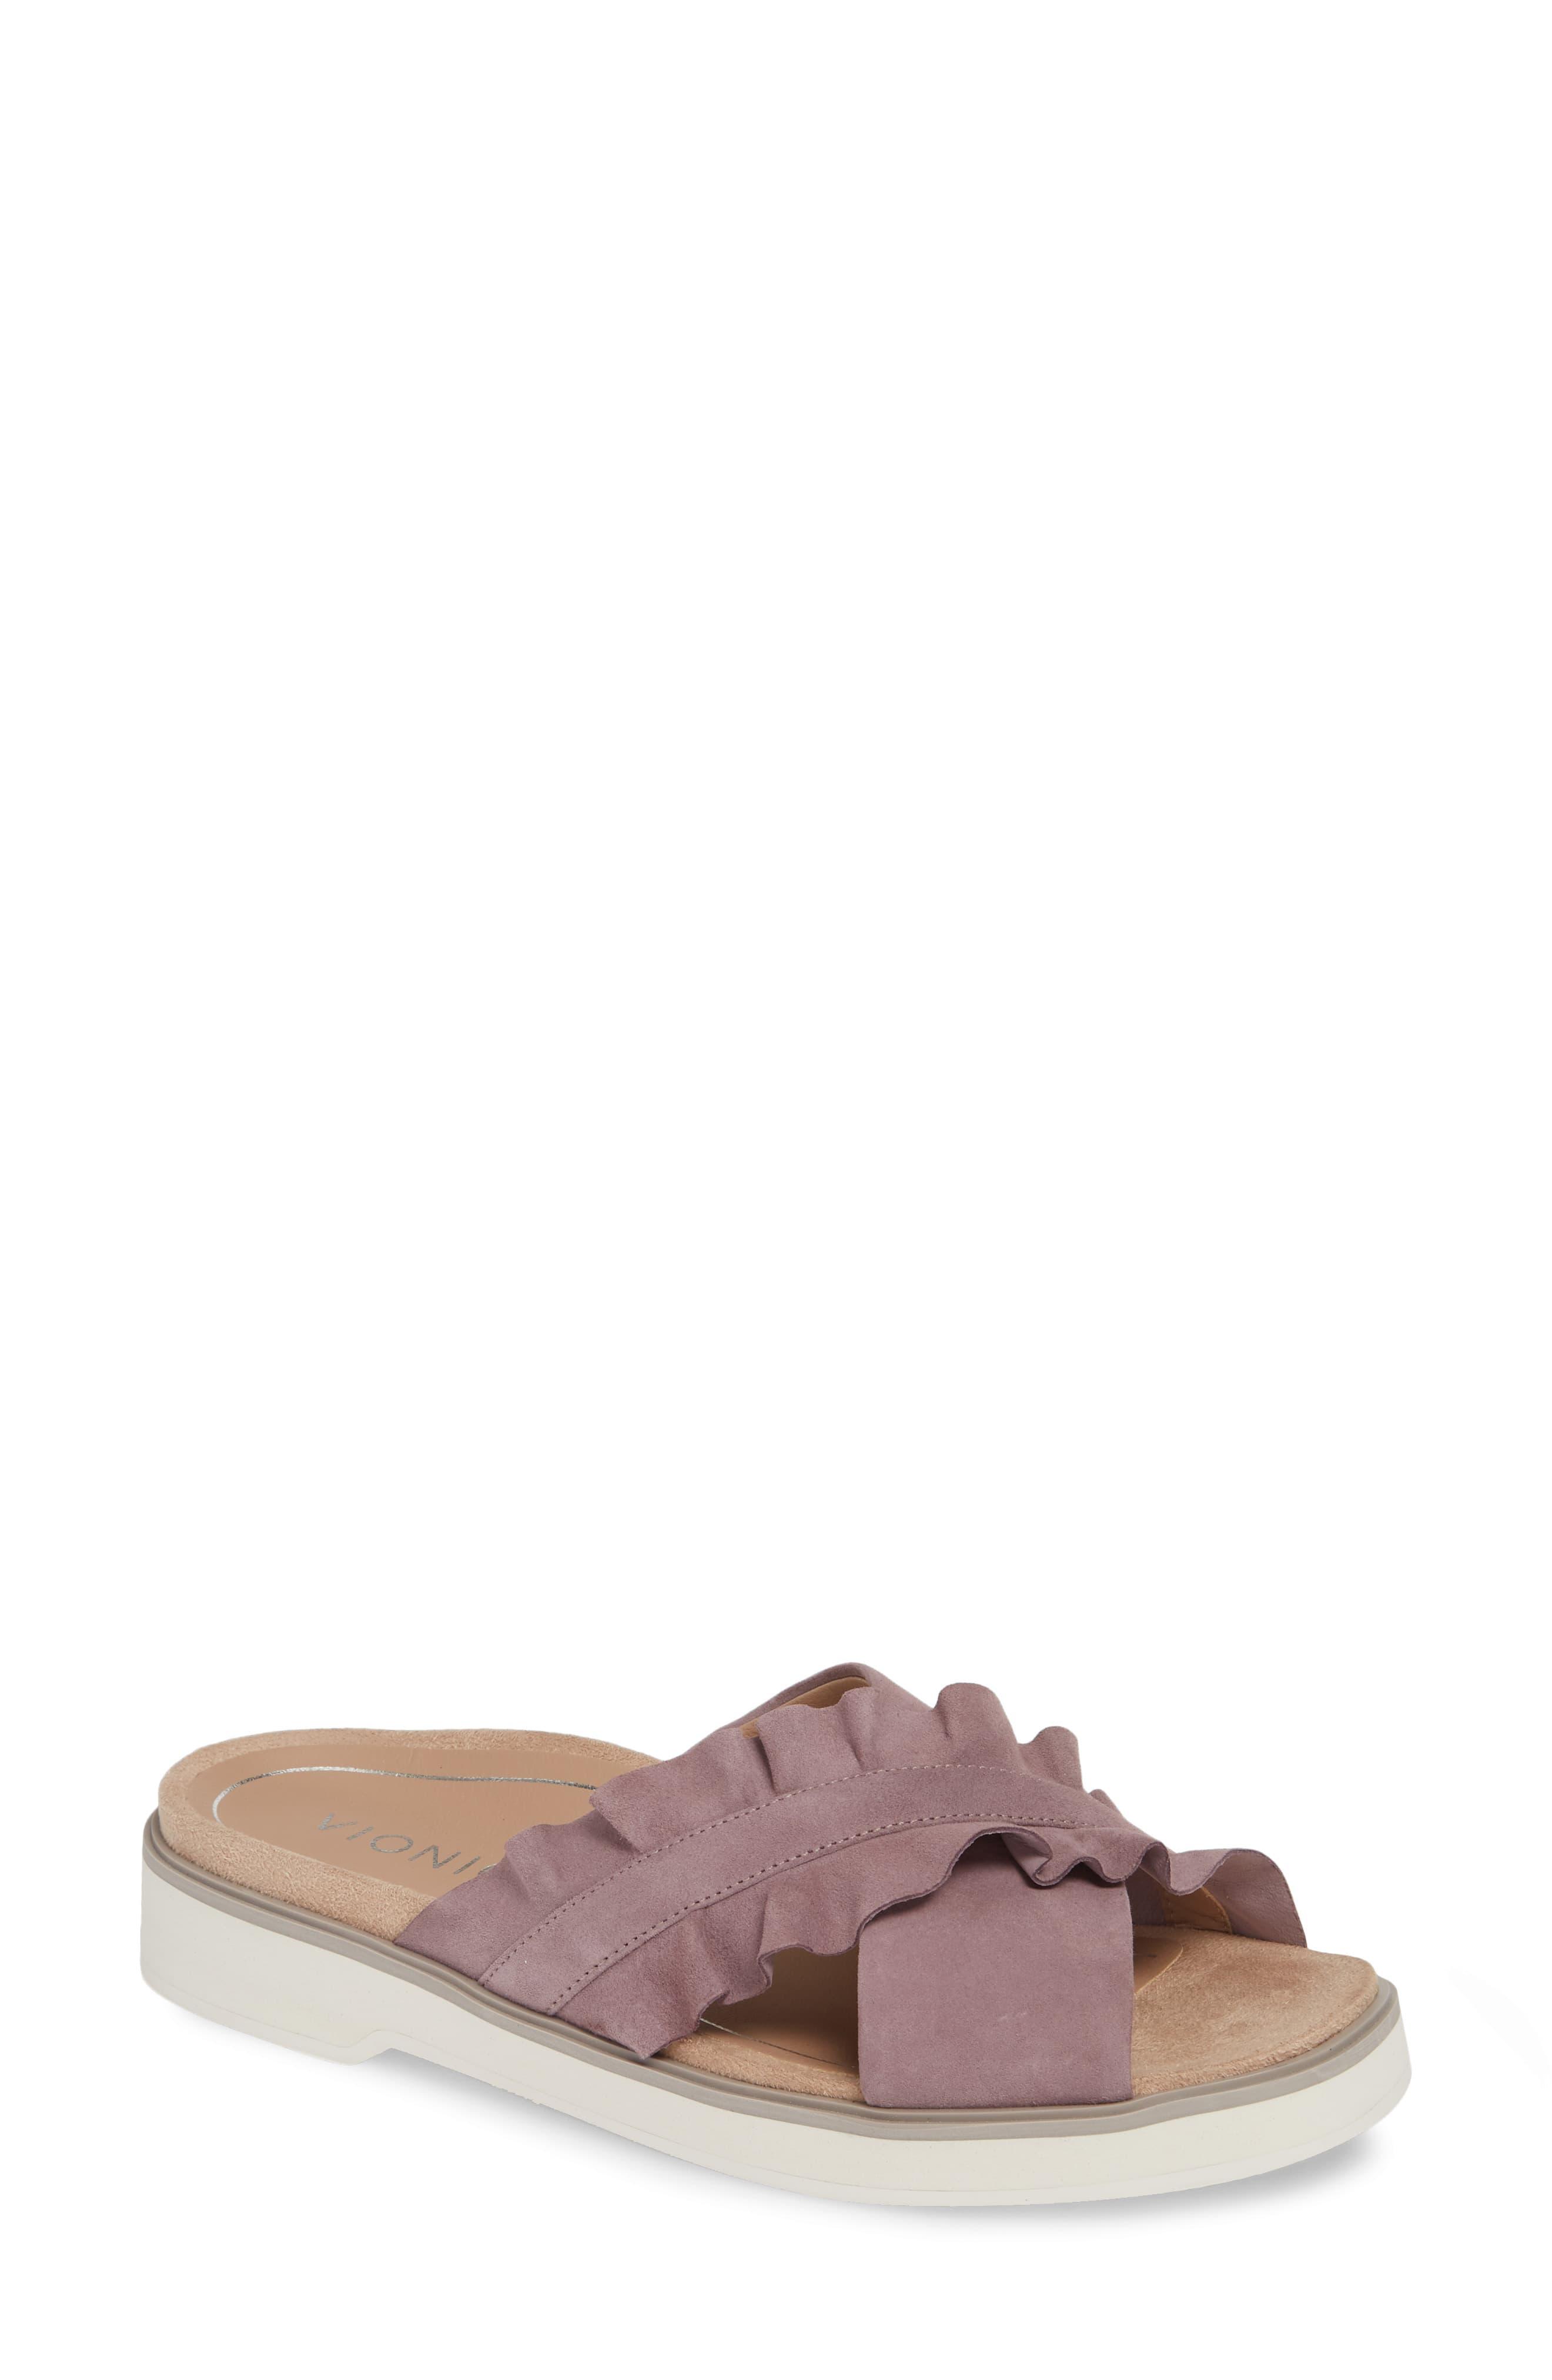 vionic azalea slide sandal